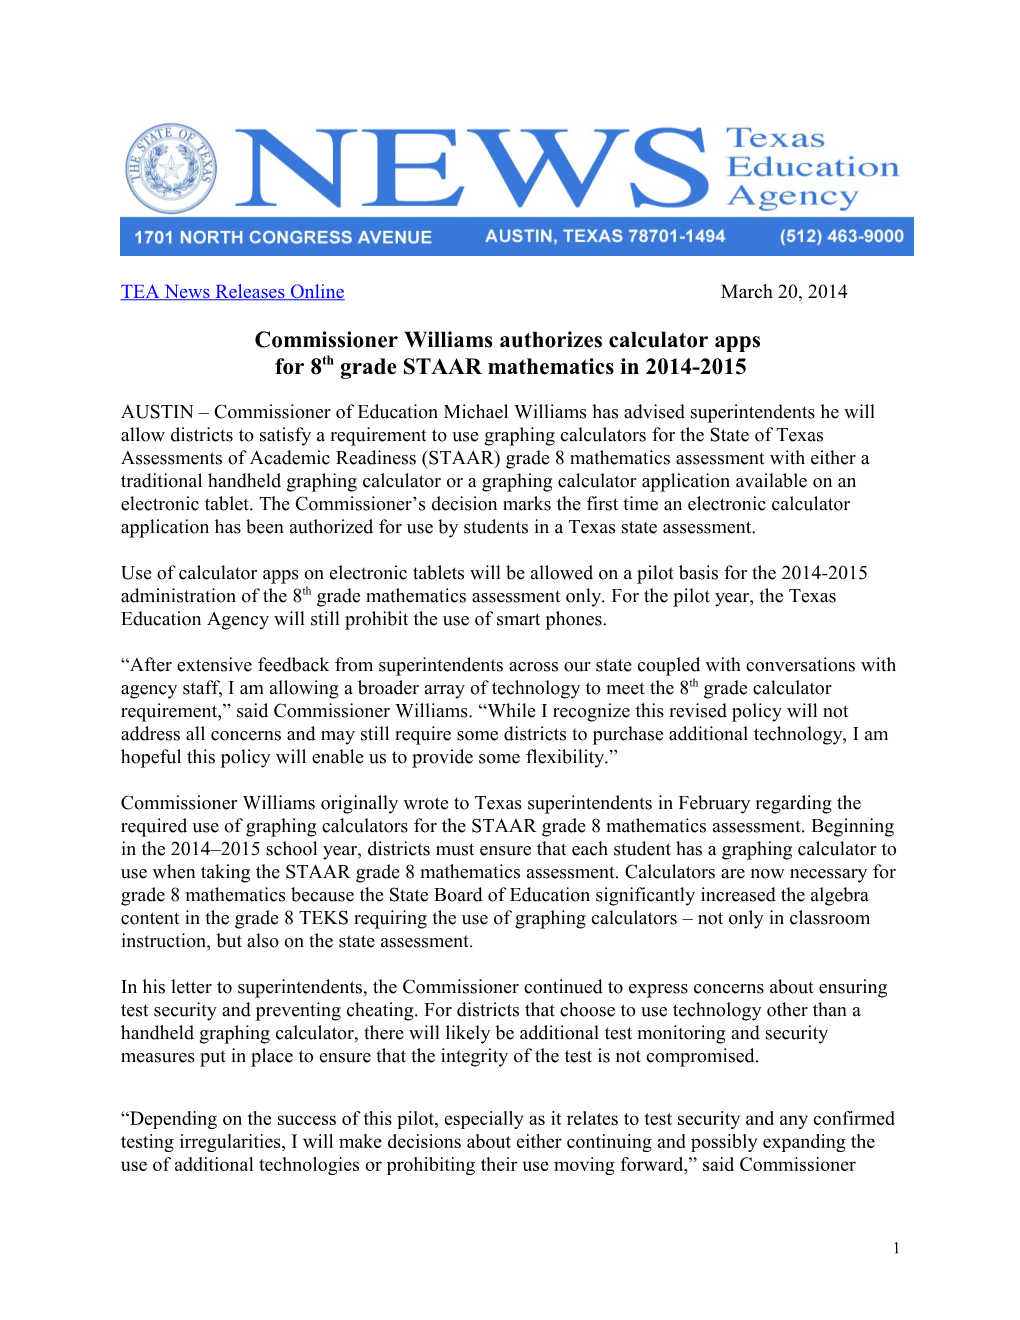 Commissioner Williams Authorizes Calculator Apps for 8Th Grade STAAR Mathematicsin 2014-2015